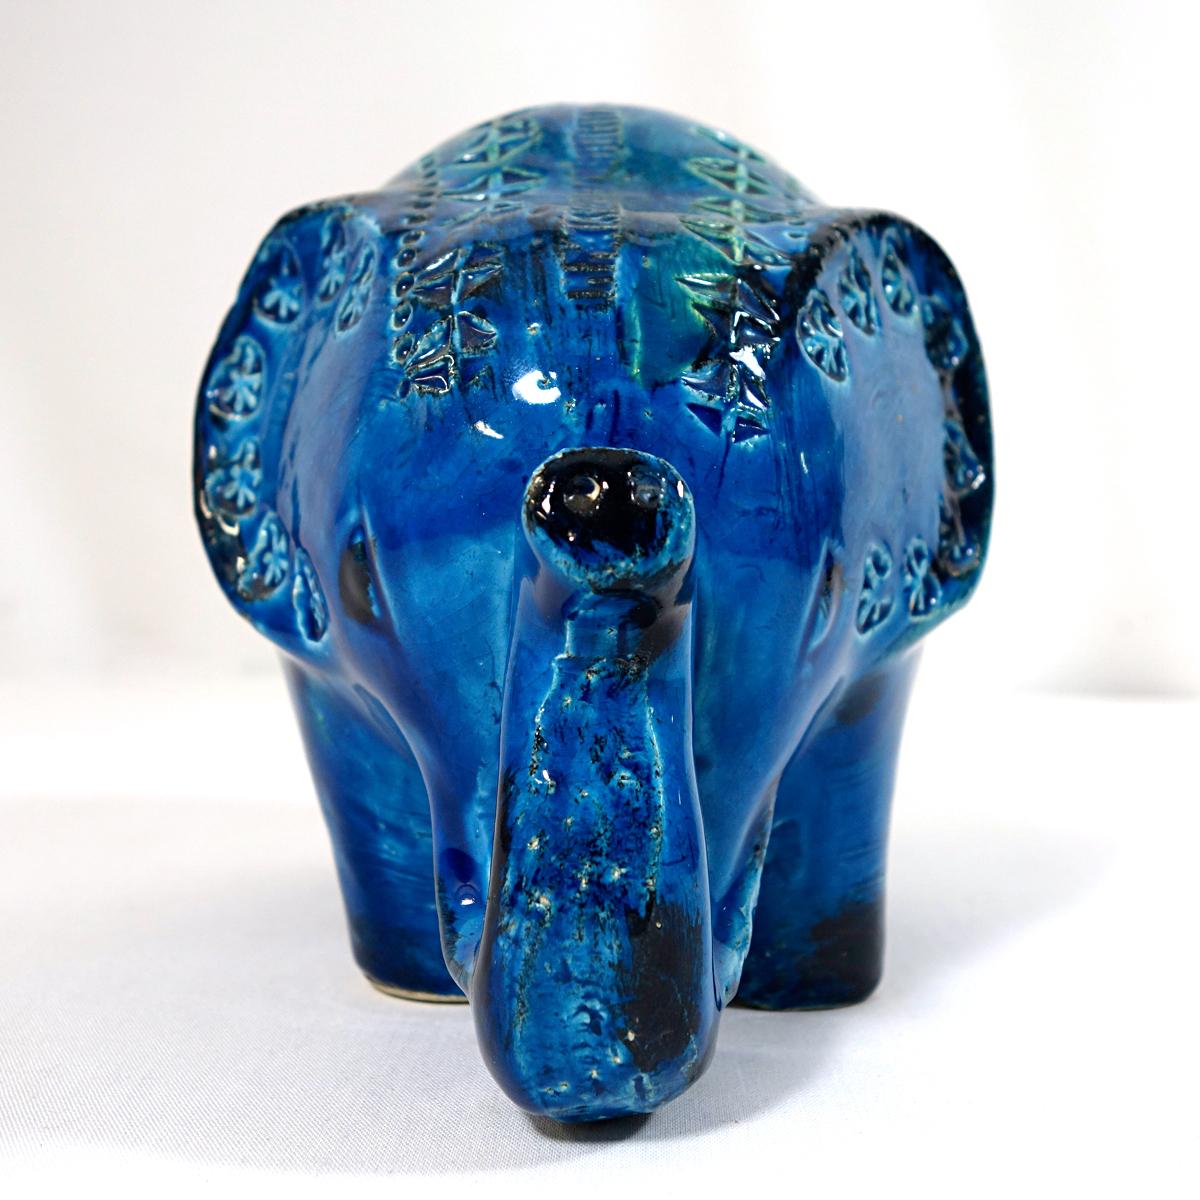 Wonderful deep blue elephant made of ceramic. This animal figurine was designed by Aldo Londi for the extensive Rimini Blu series of Italian ceramic specialist Bitossi.